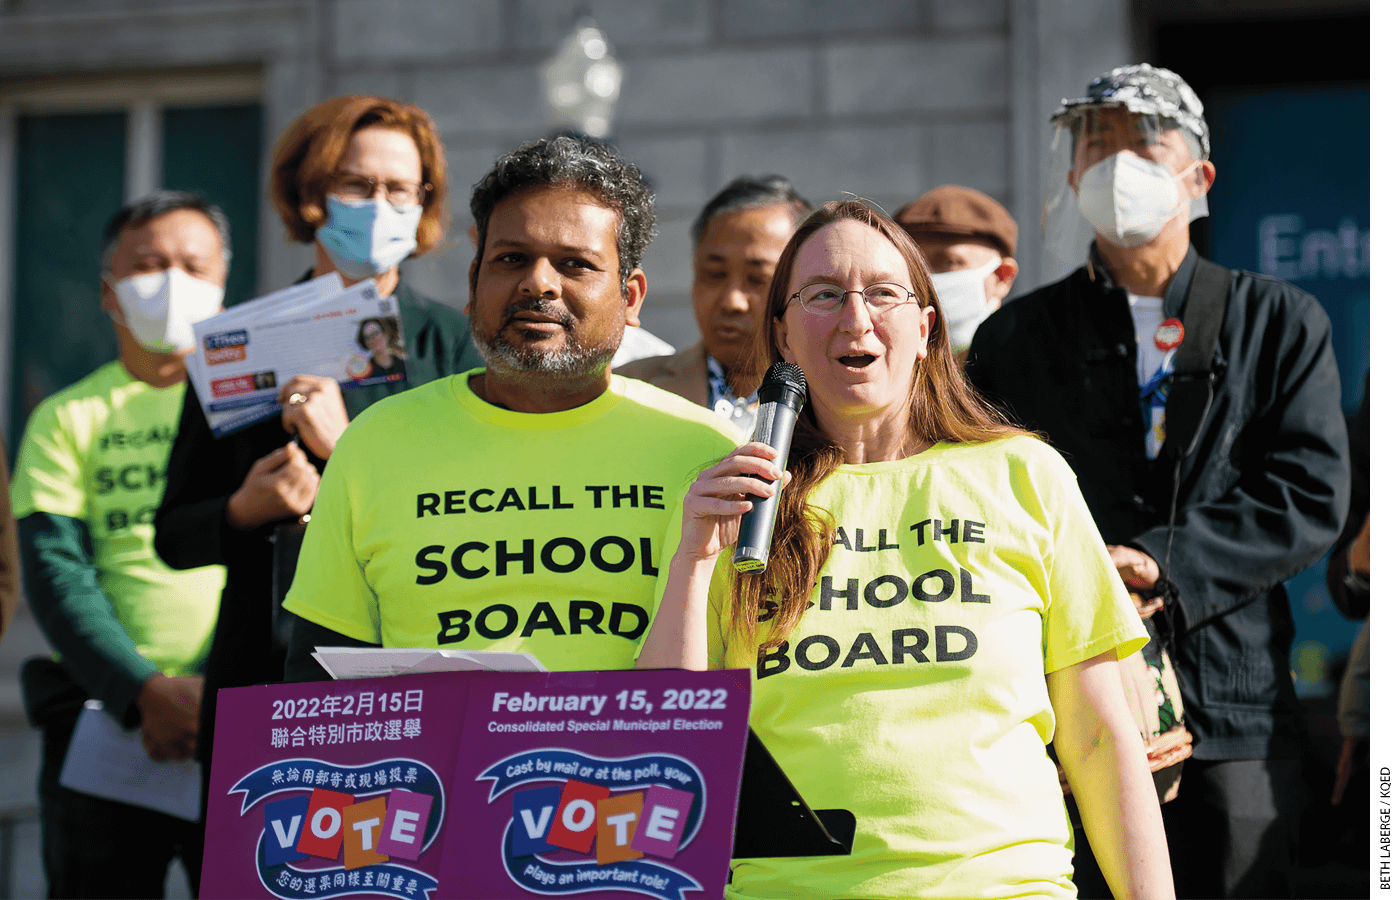 The San Francisco school- board recall effort was led by parents Siva Raj (left) and Autumn Looijen.